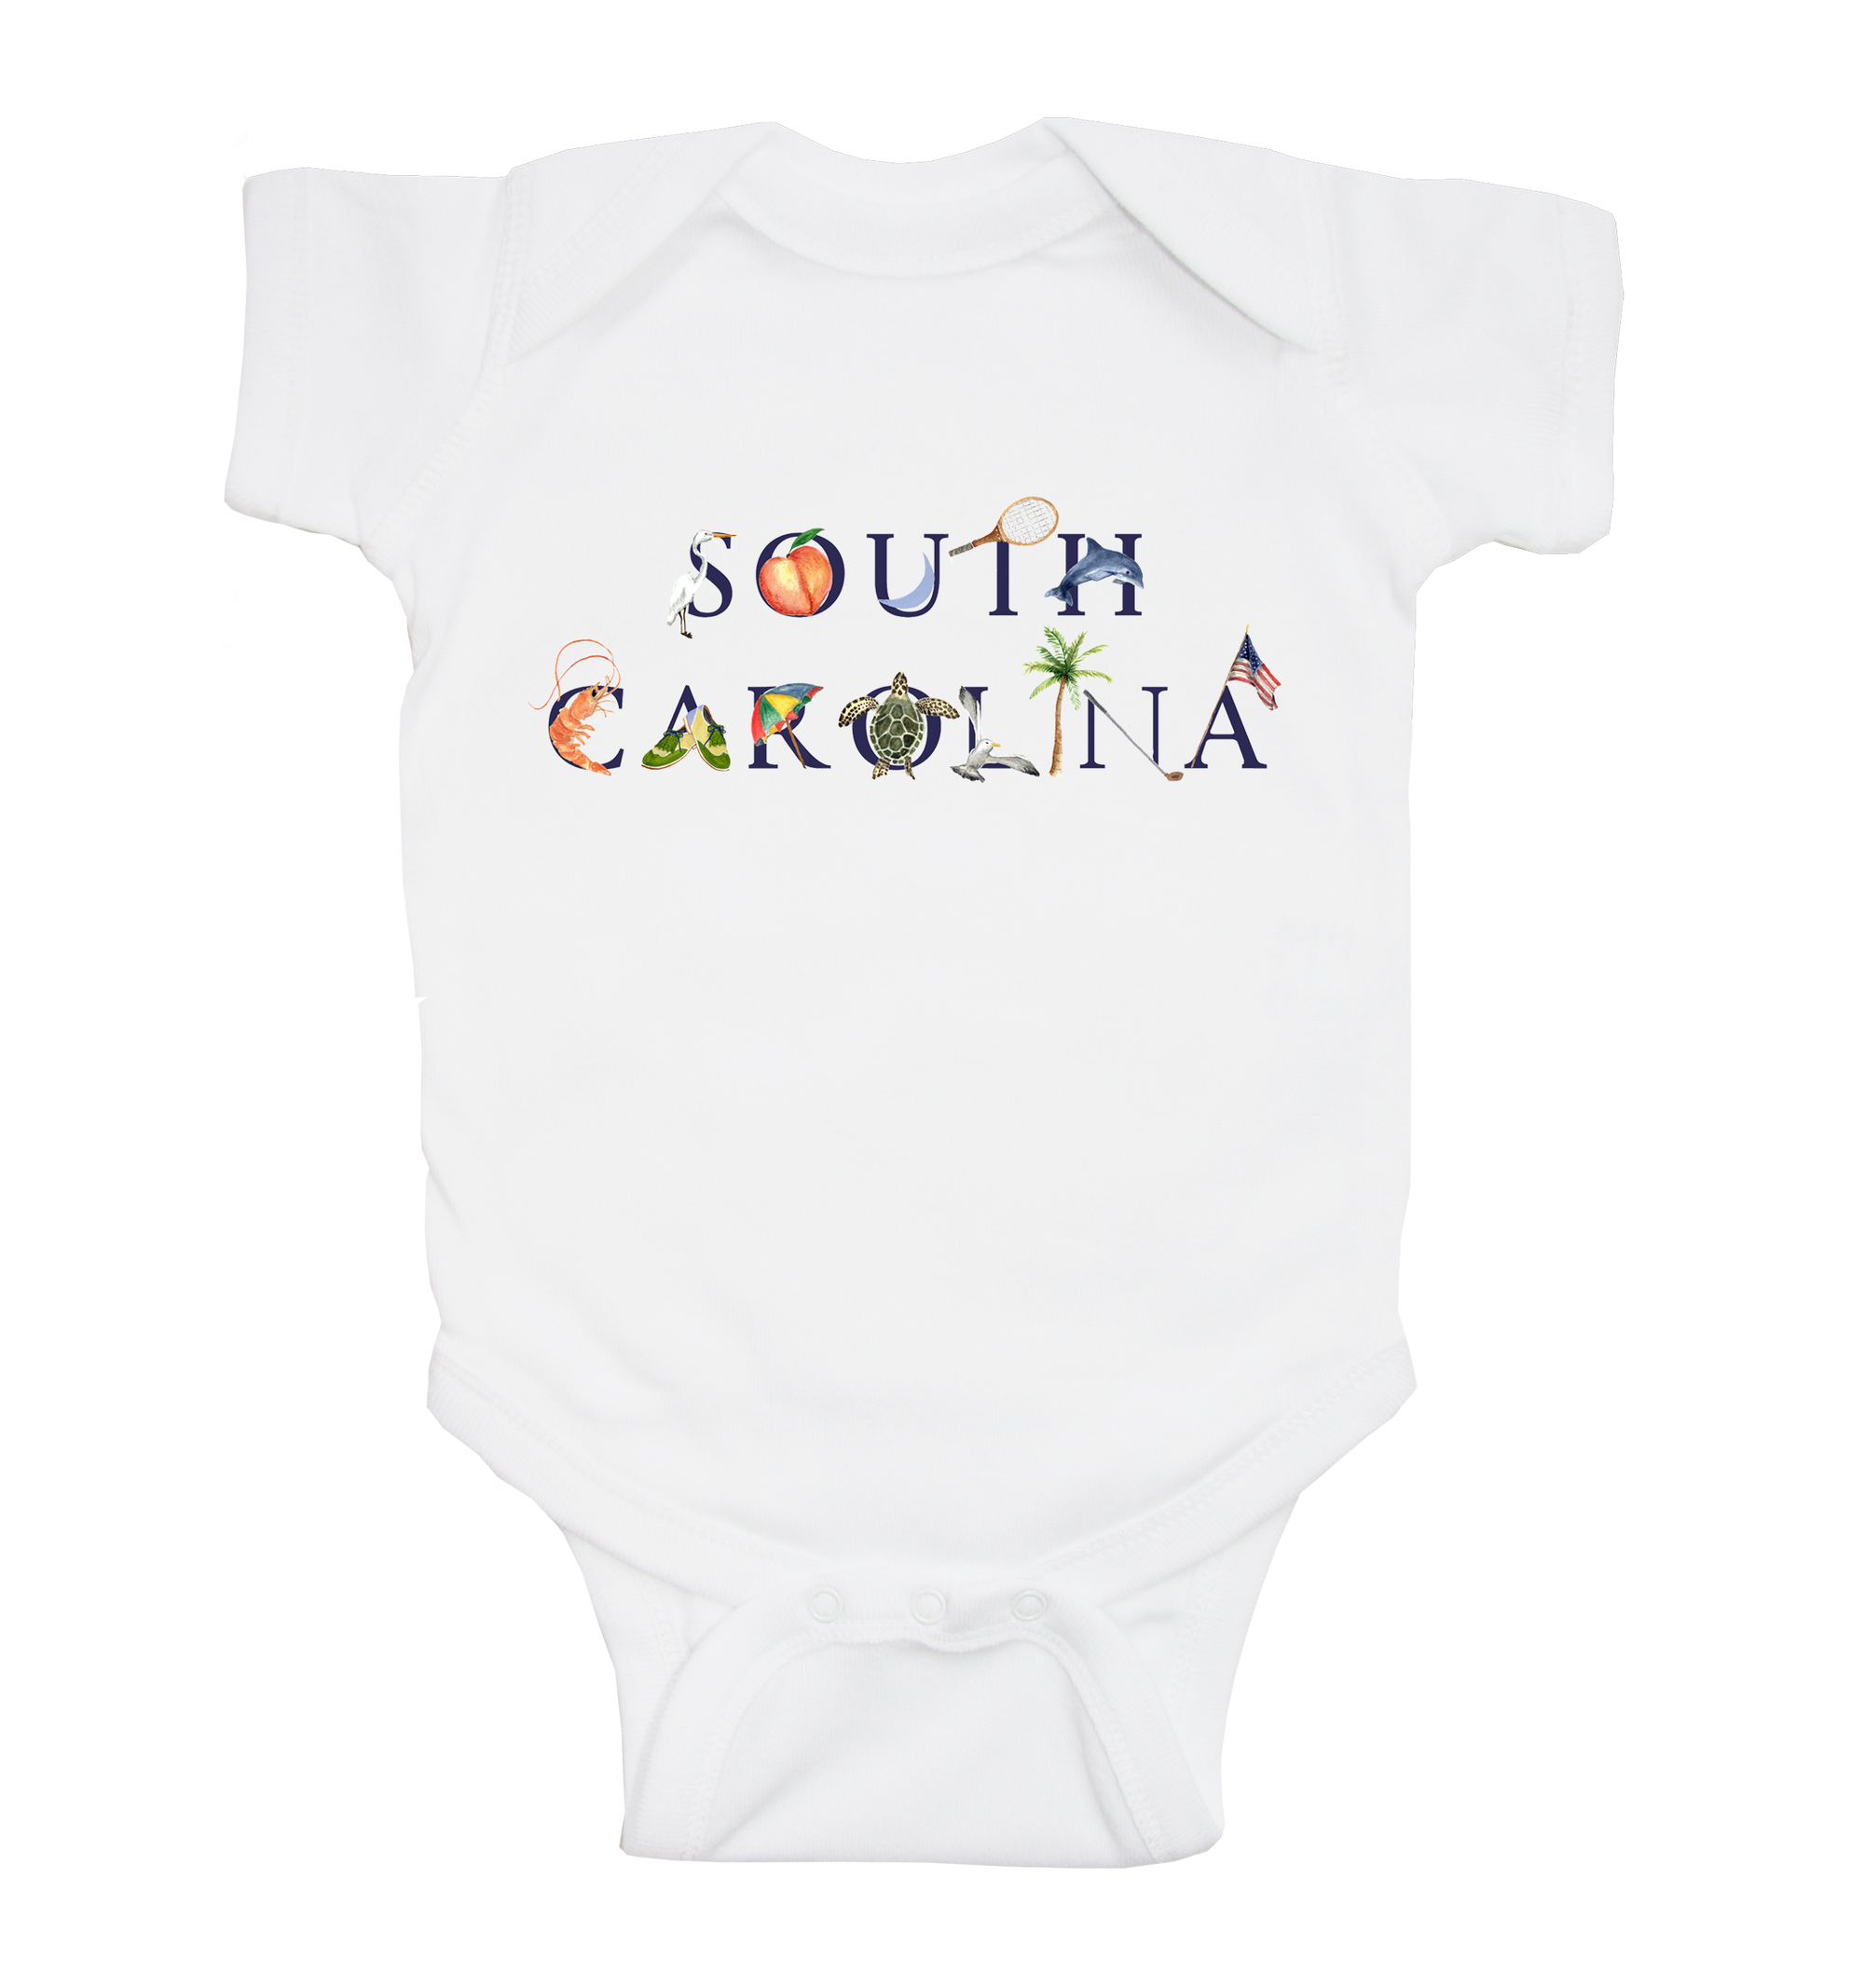 South Carolina baby snap up short sleeve